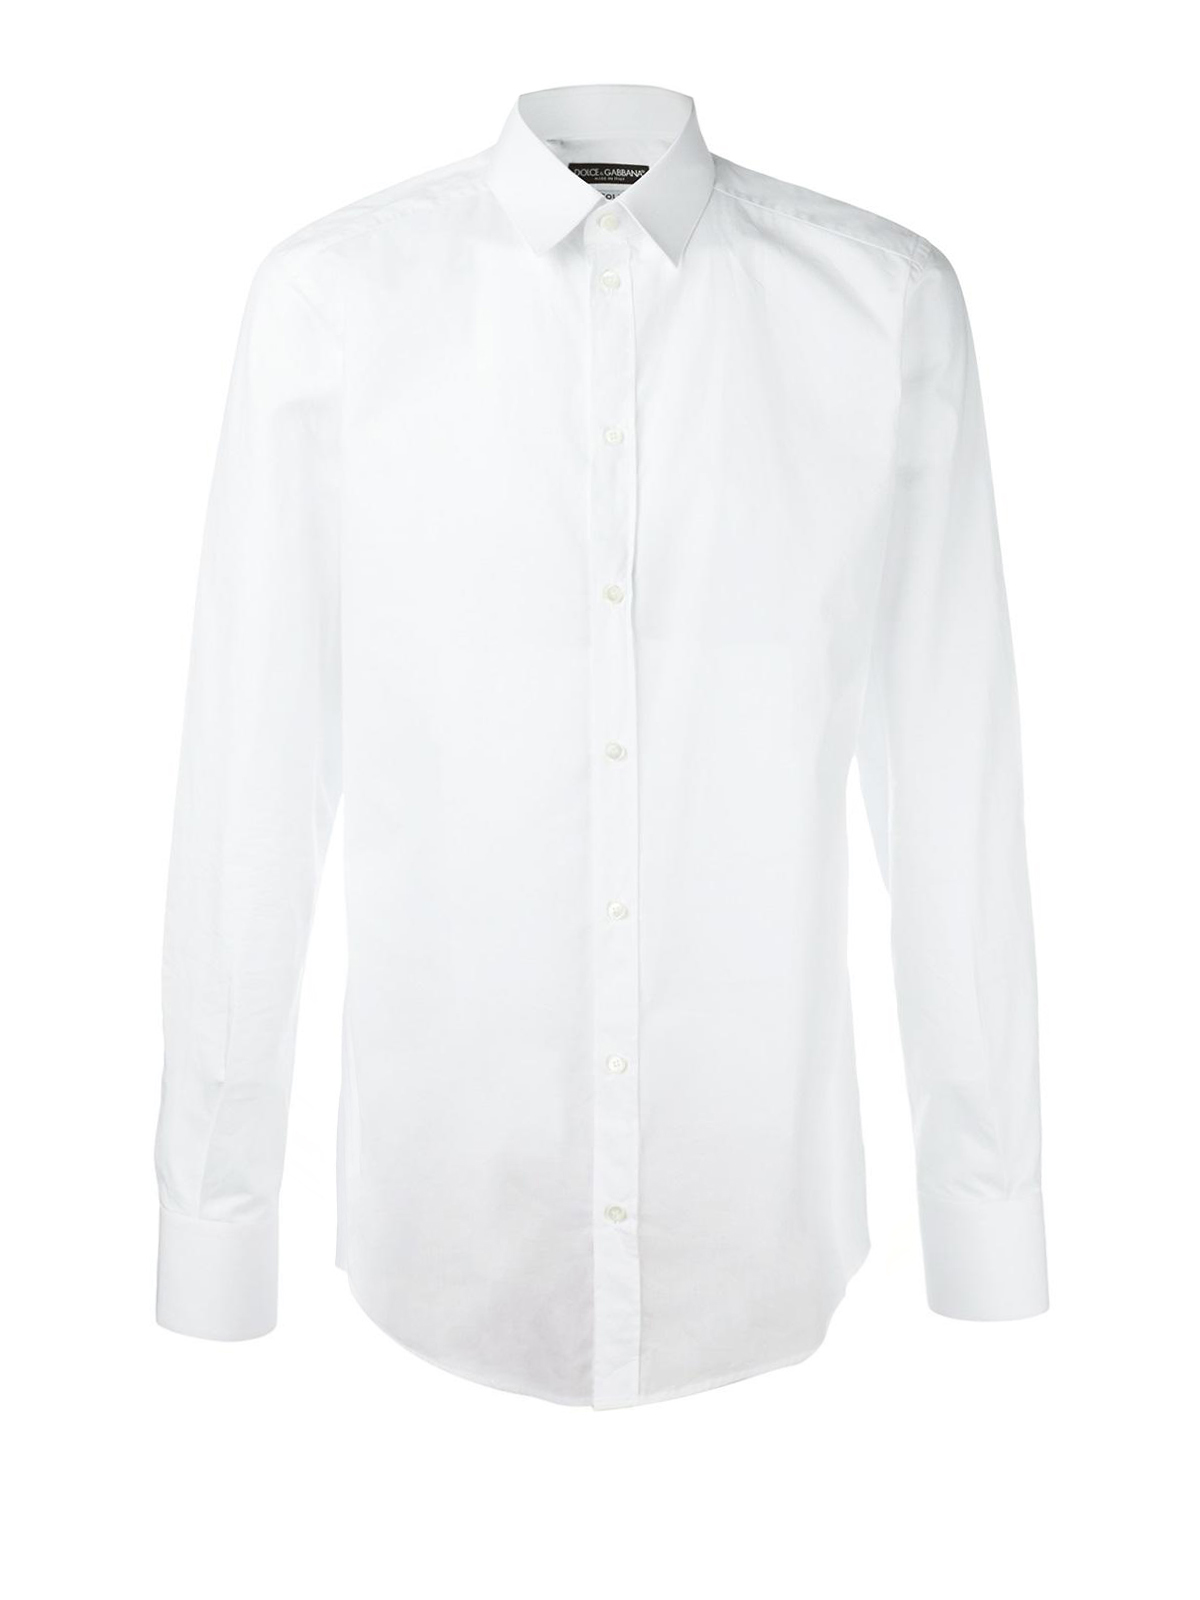 Camisas Dolce & Gabbana Camisa Blanca Hombre - G5DY4TFU5GKW0800